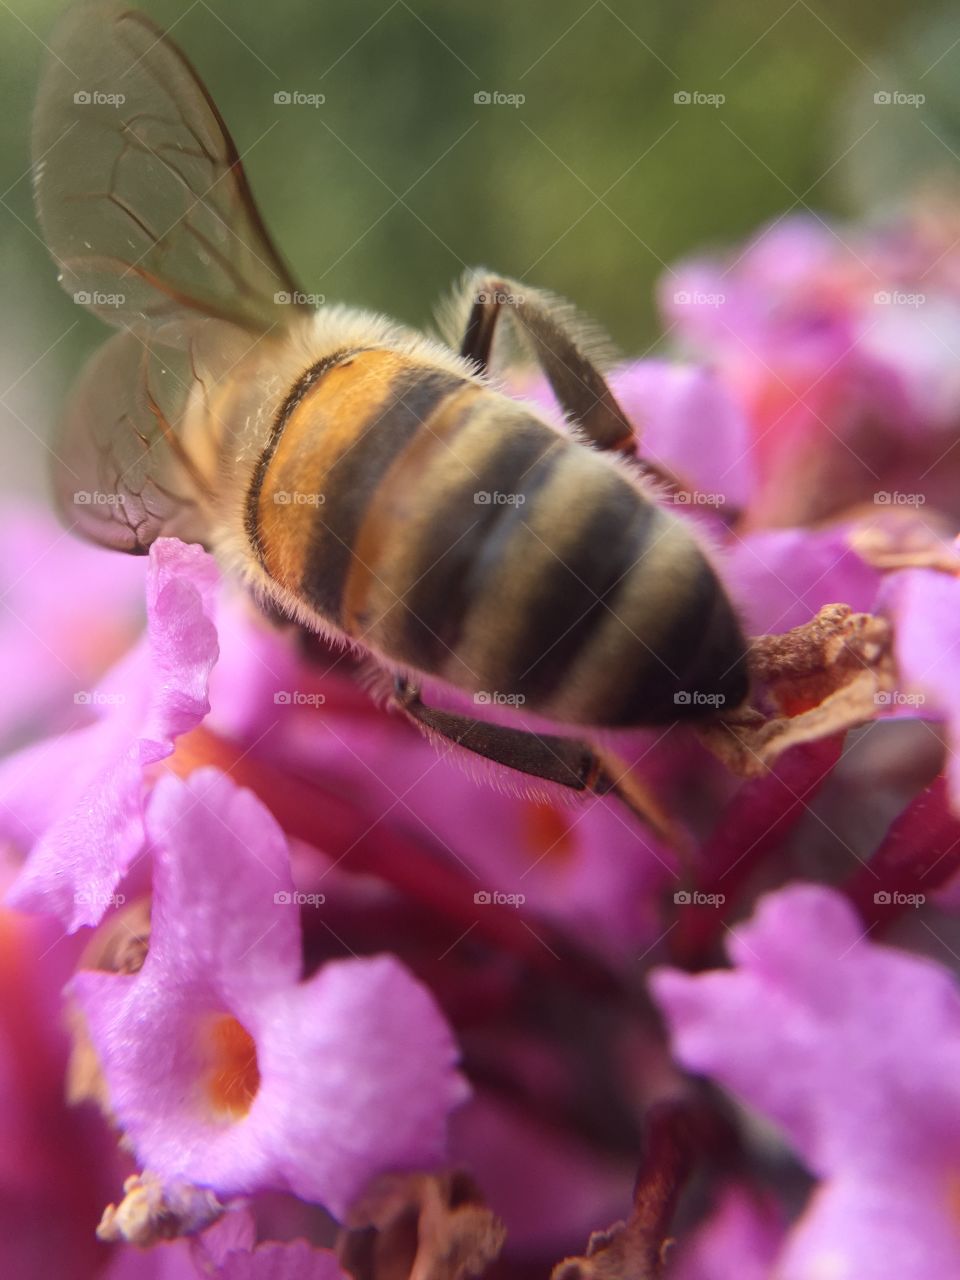 Honey bee :)